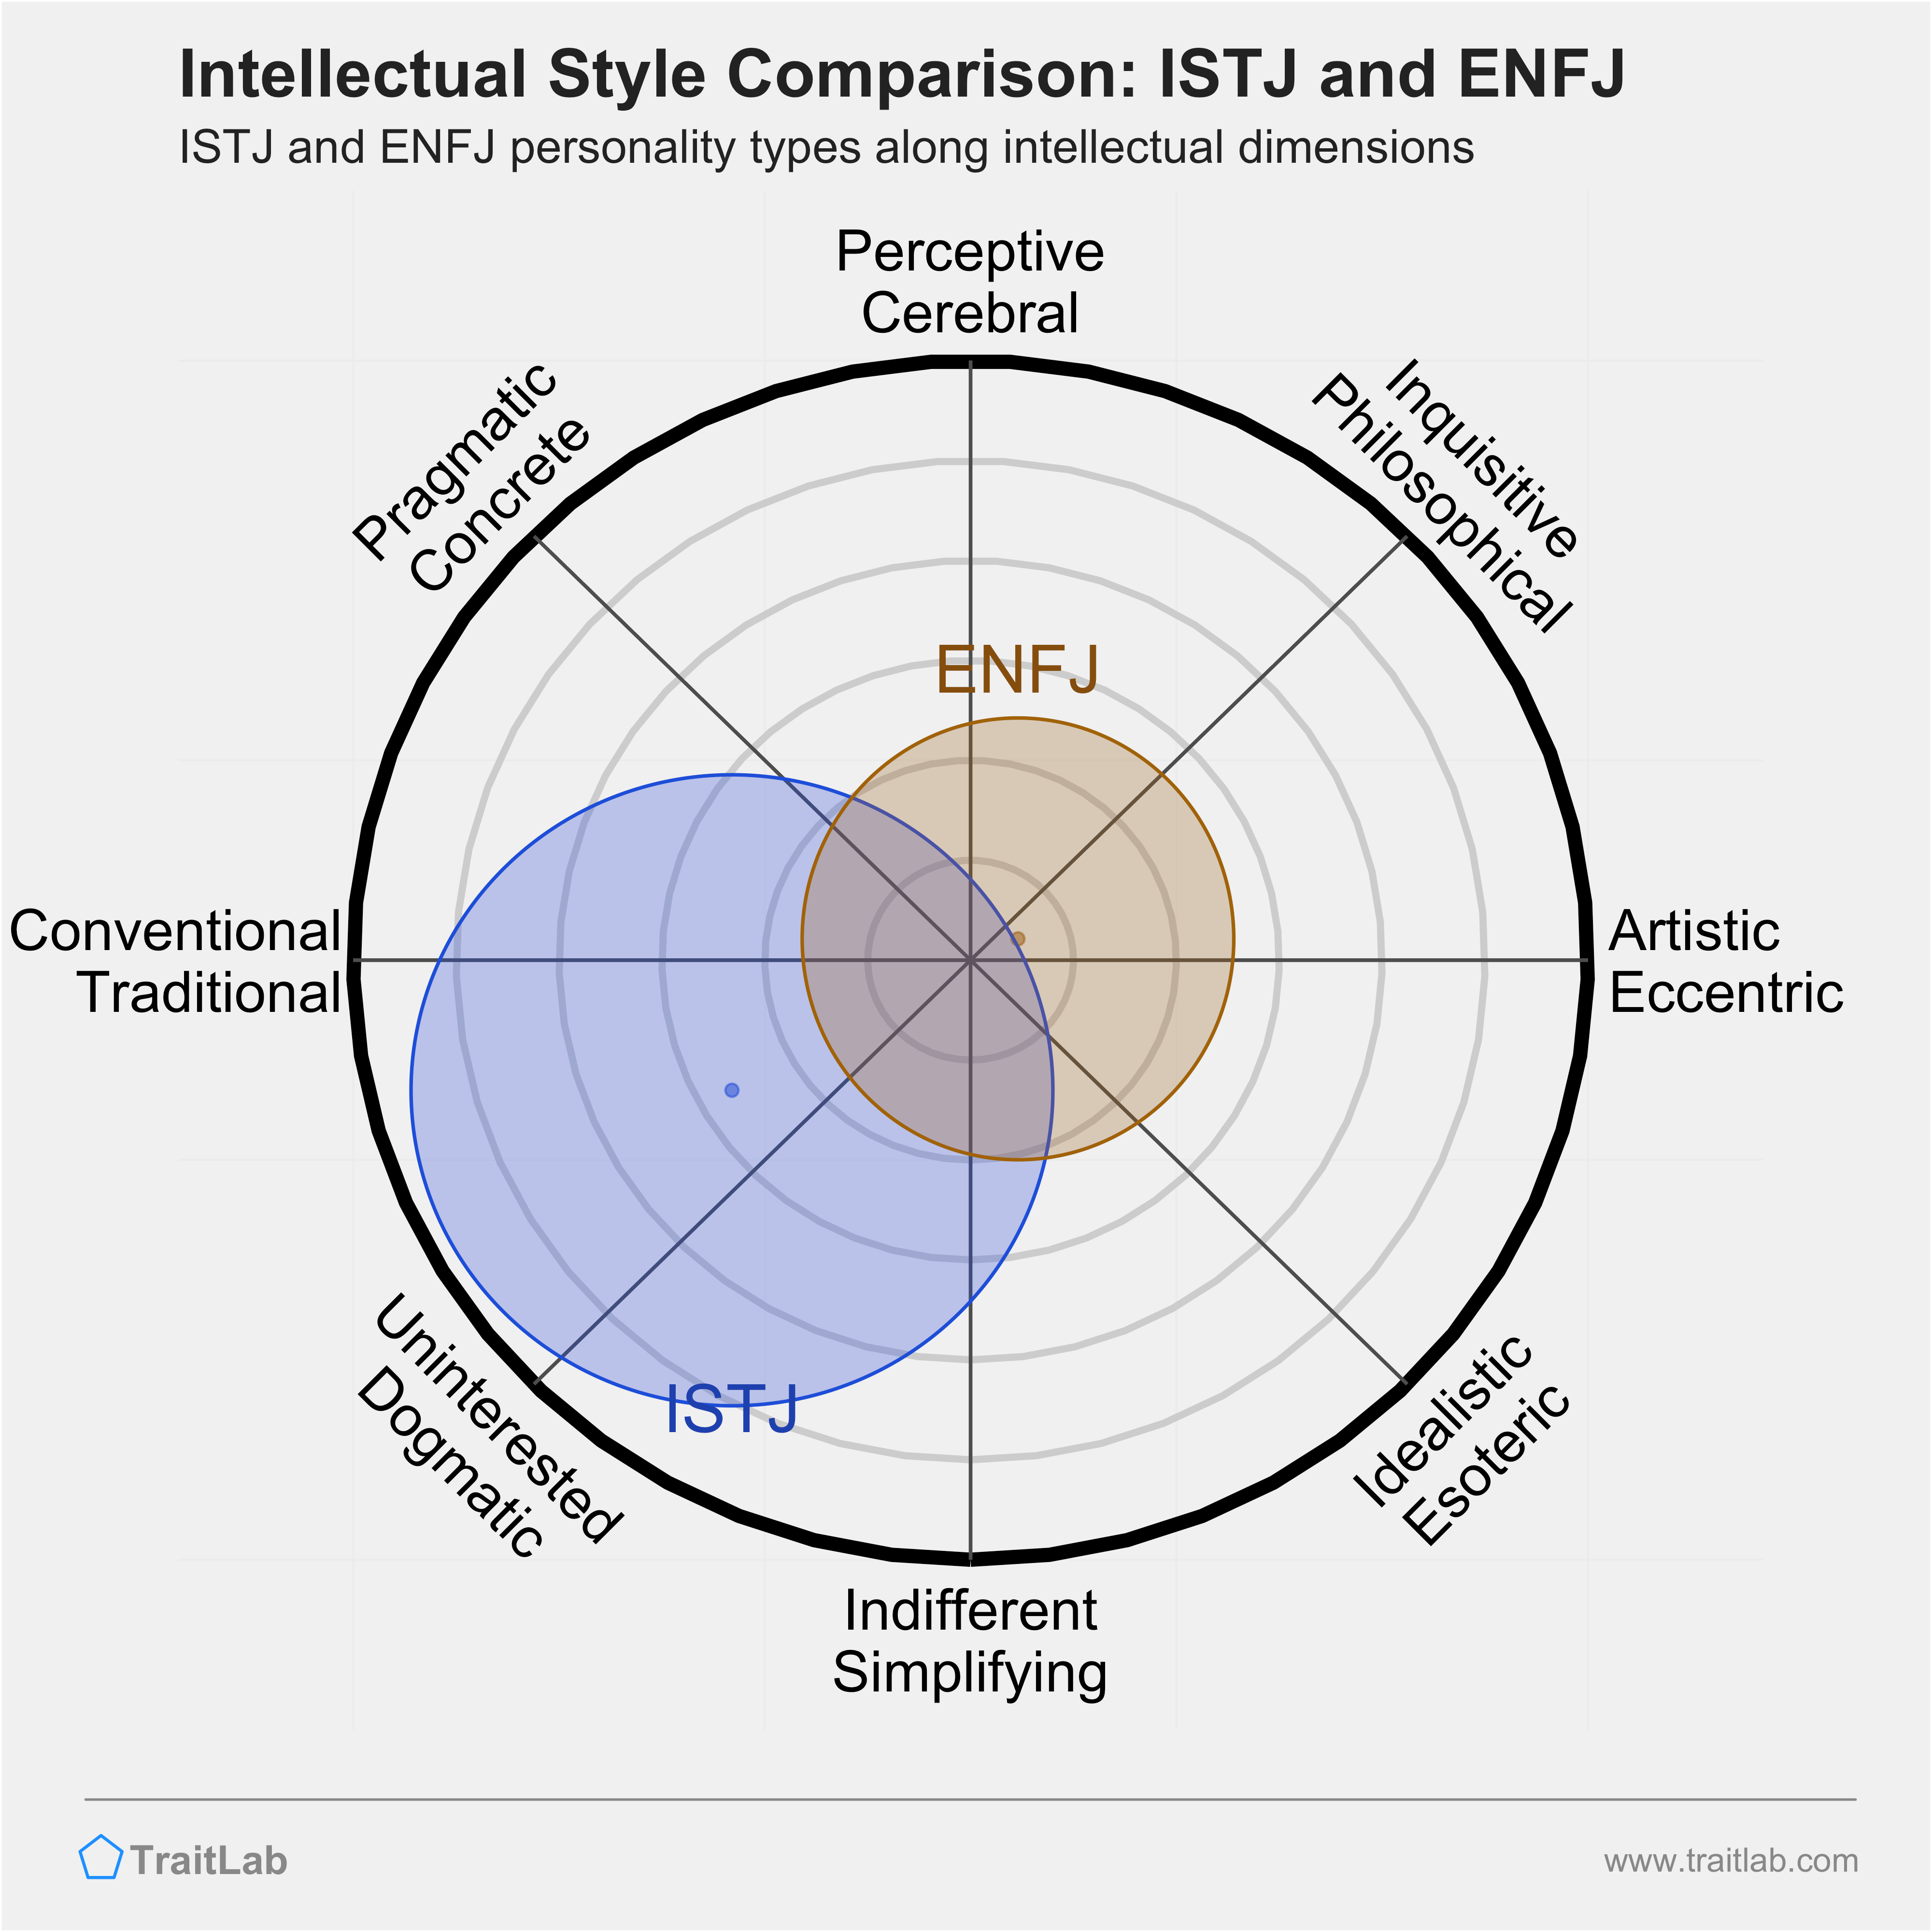 ISTJ and ENFJ comparison across intellectual dimensions